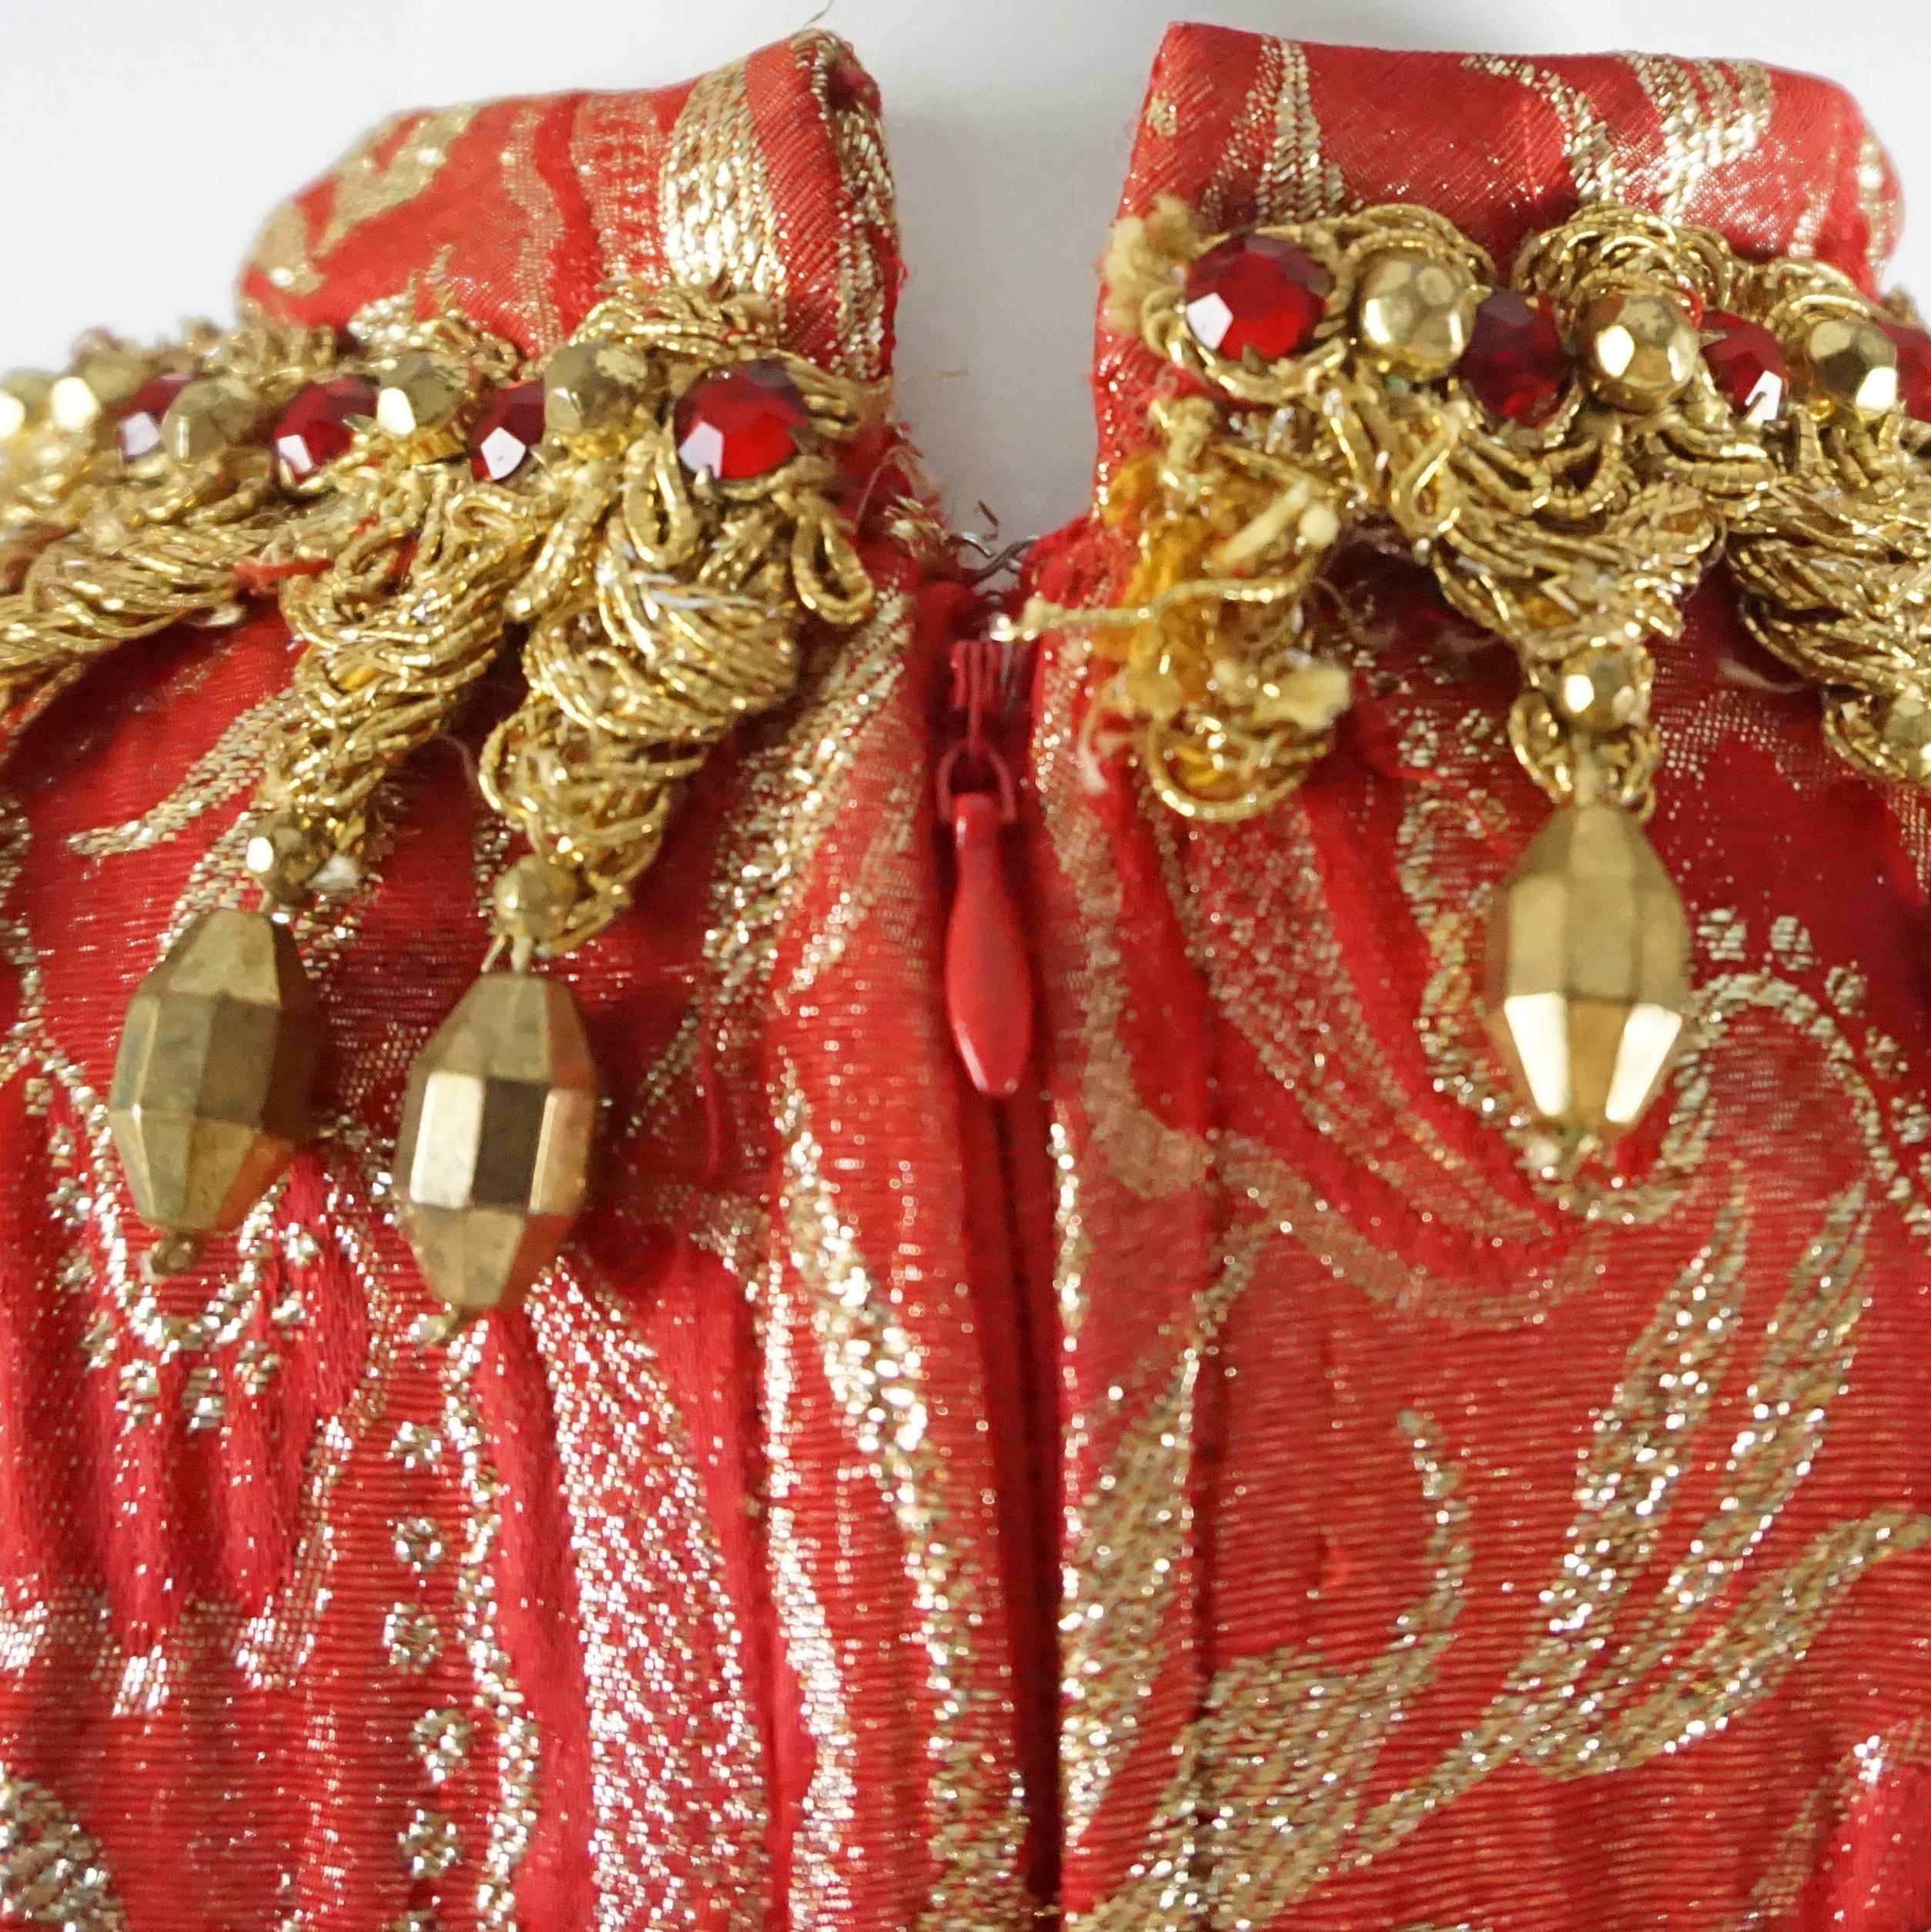 Oscar de la Renta Red and Gold Brocade Dress with Beaded Collar - M - 1990's  2